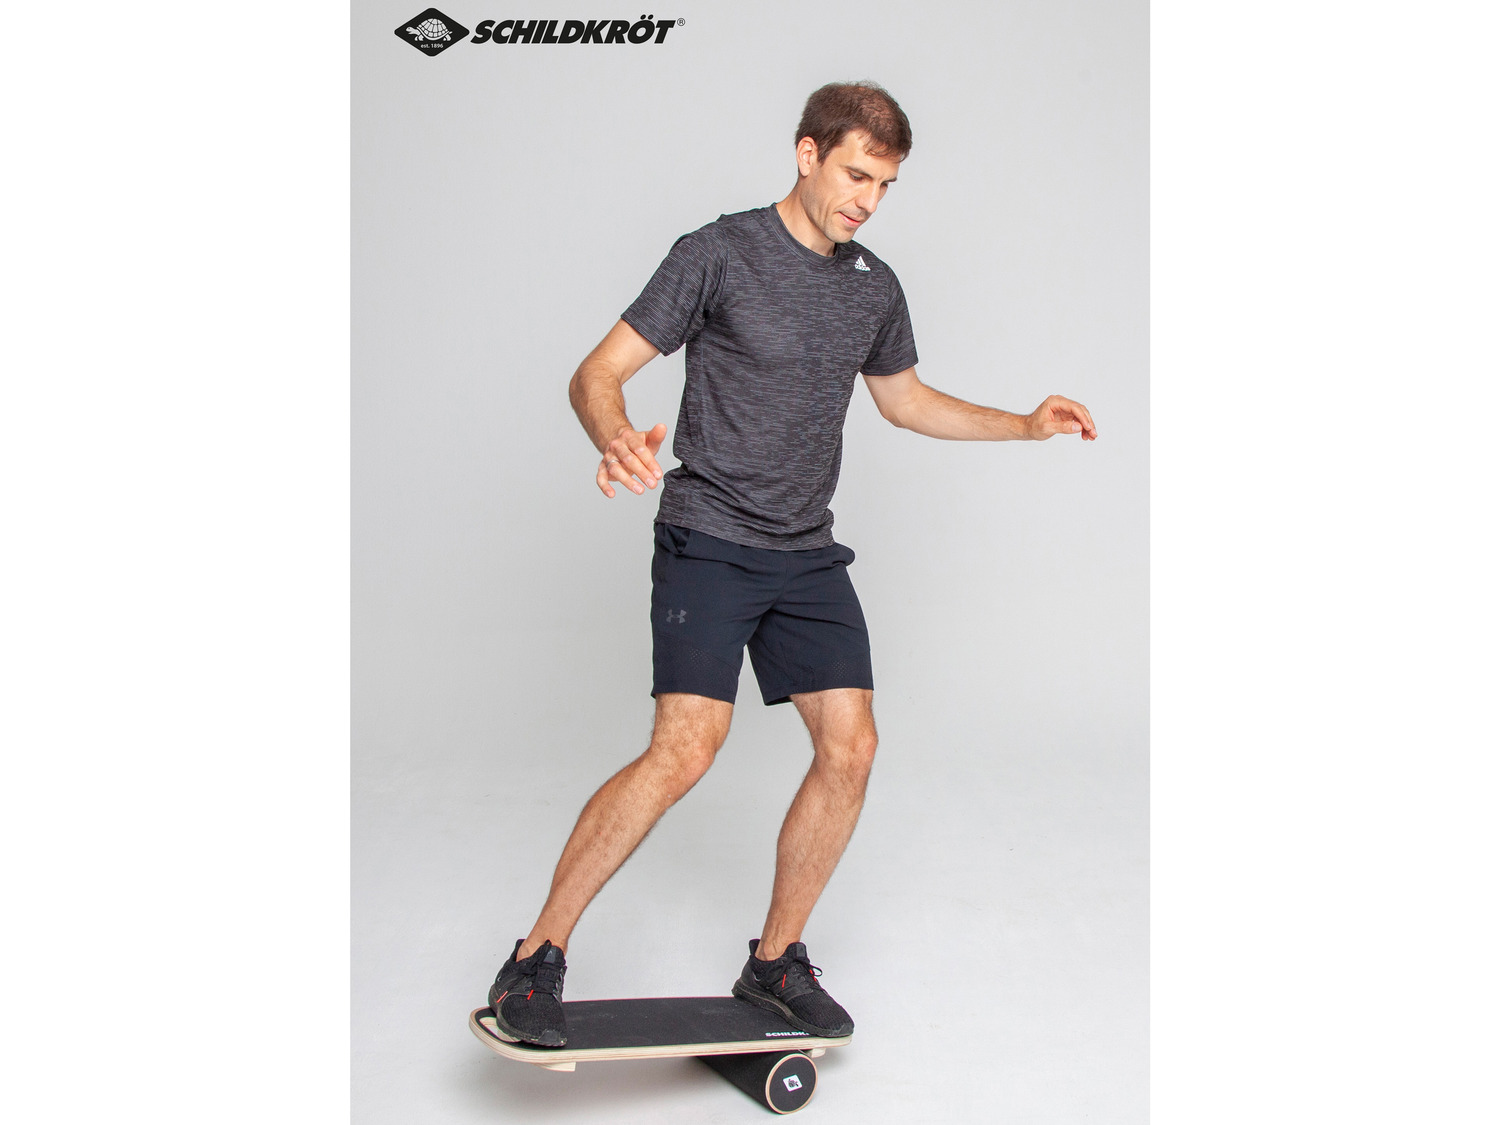 Schildkröt Fitness Wooden LIDL | Balance Board